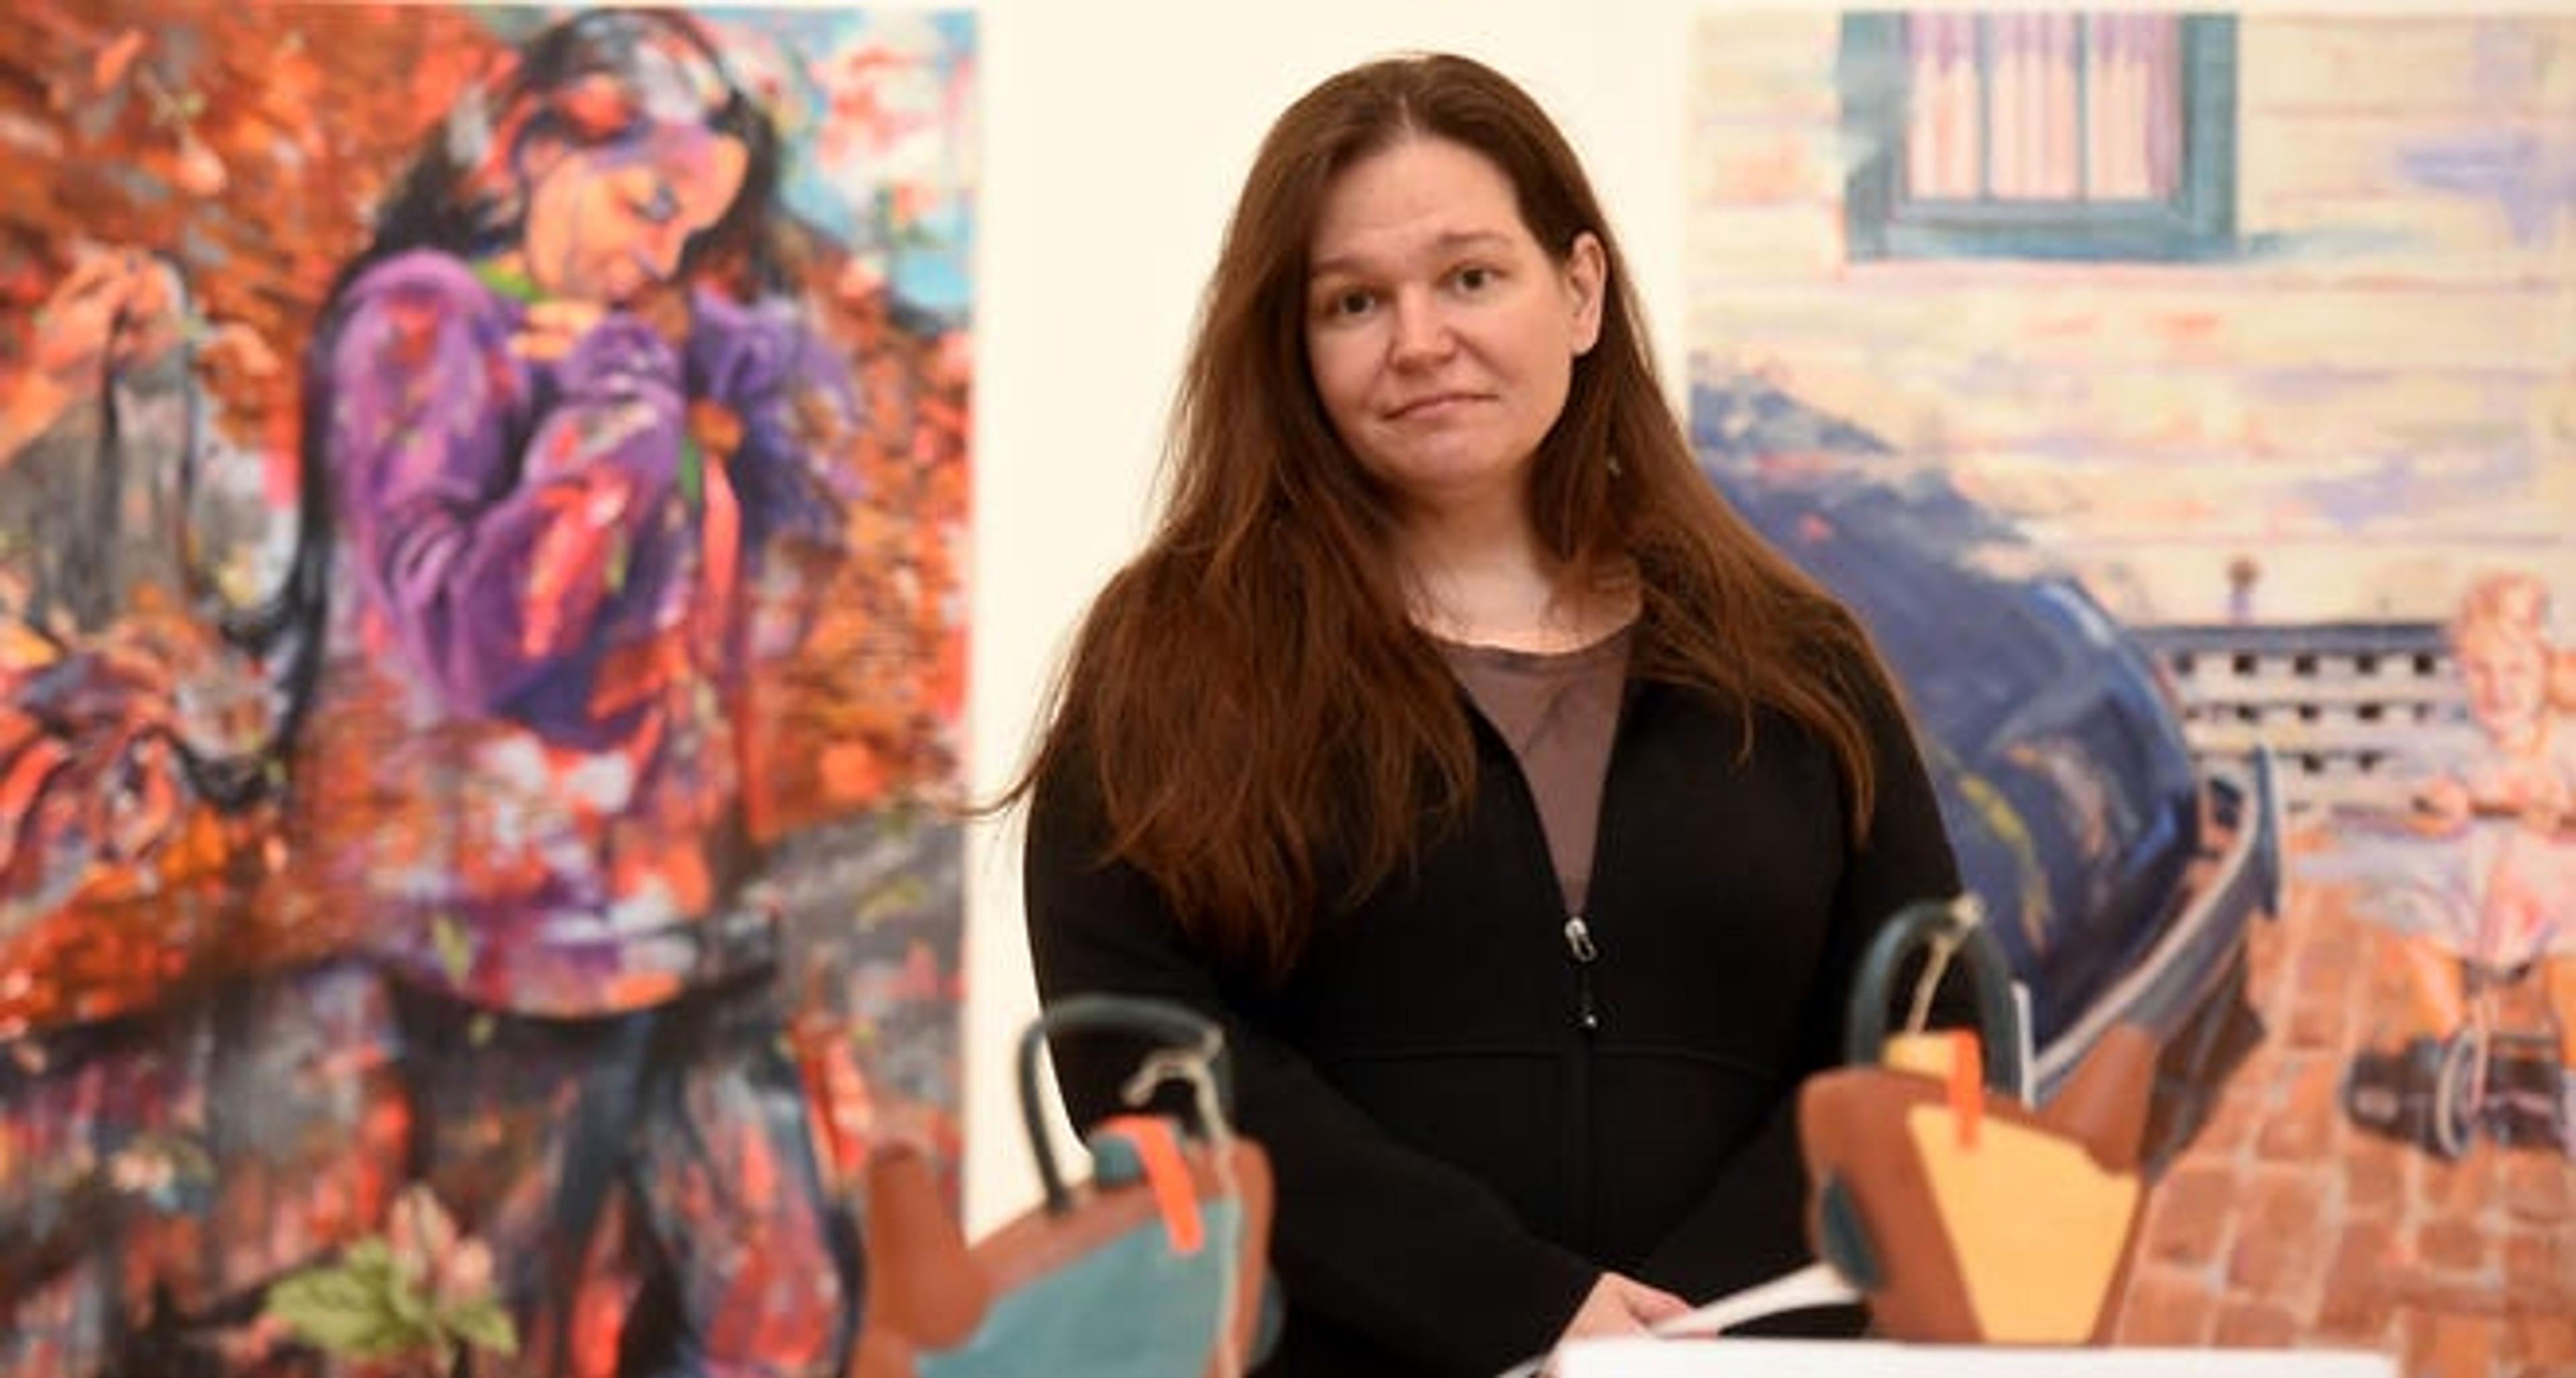 Erie Art Museum Executive Director Laura Domencic